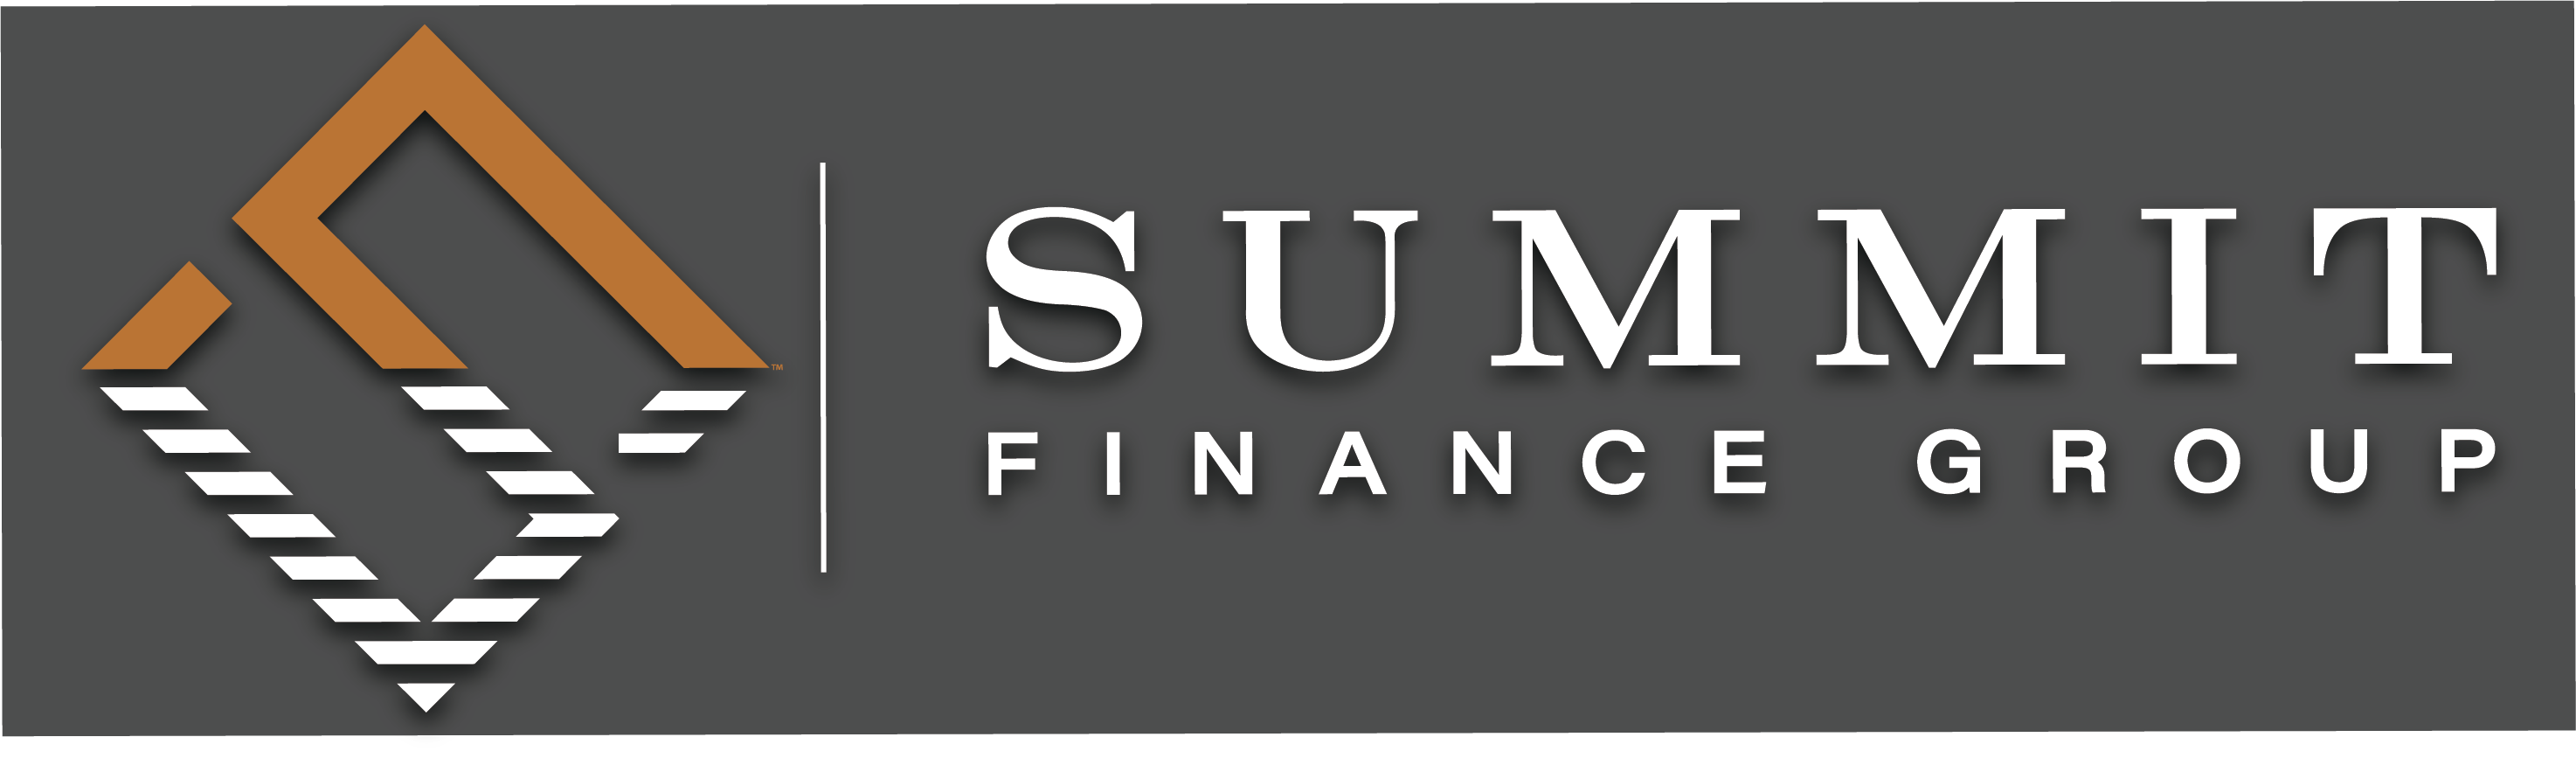 summit finance group